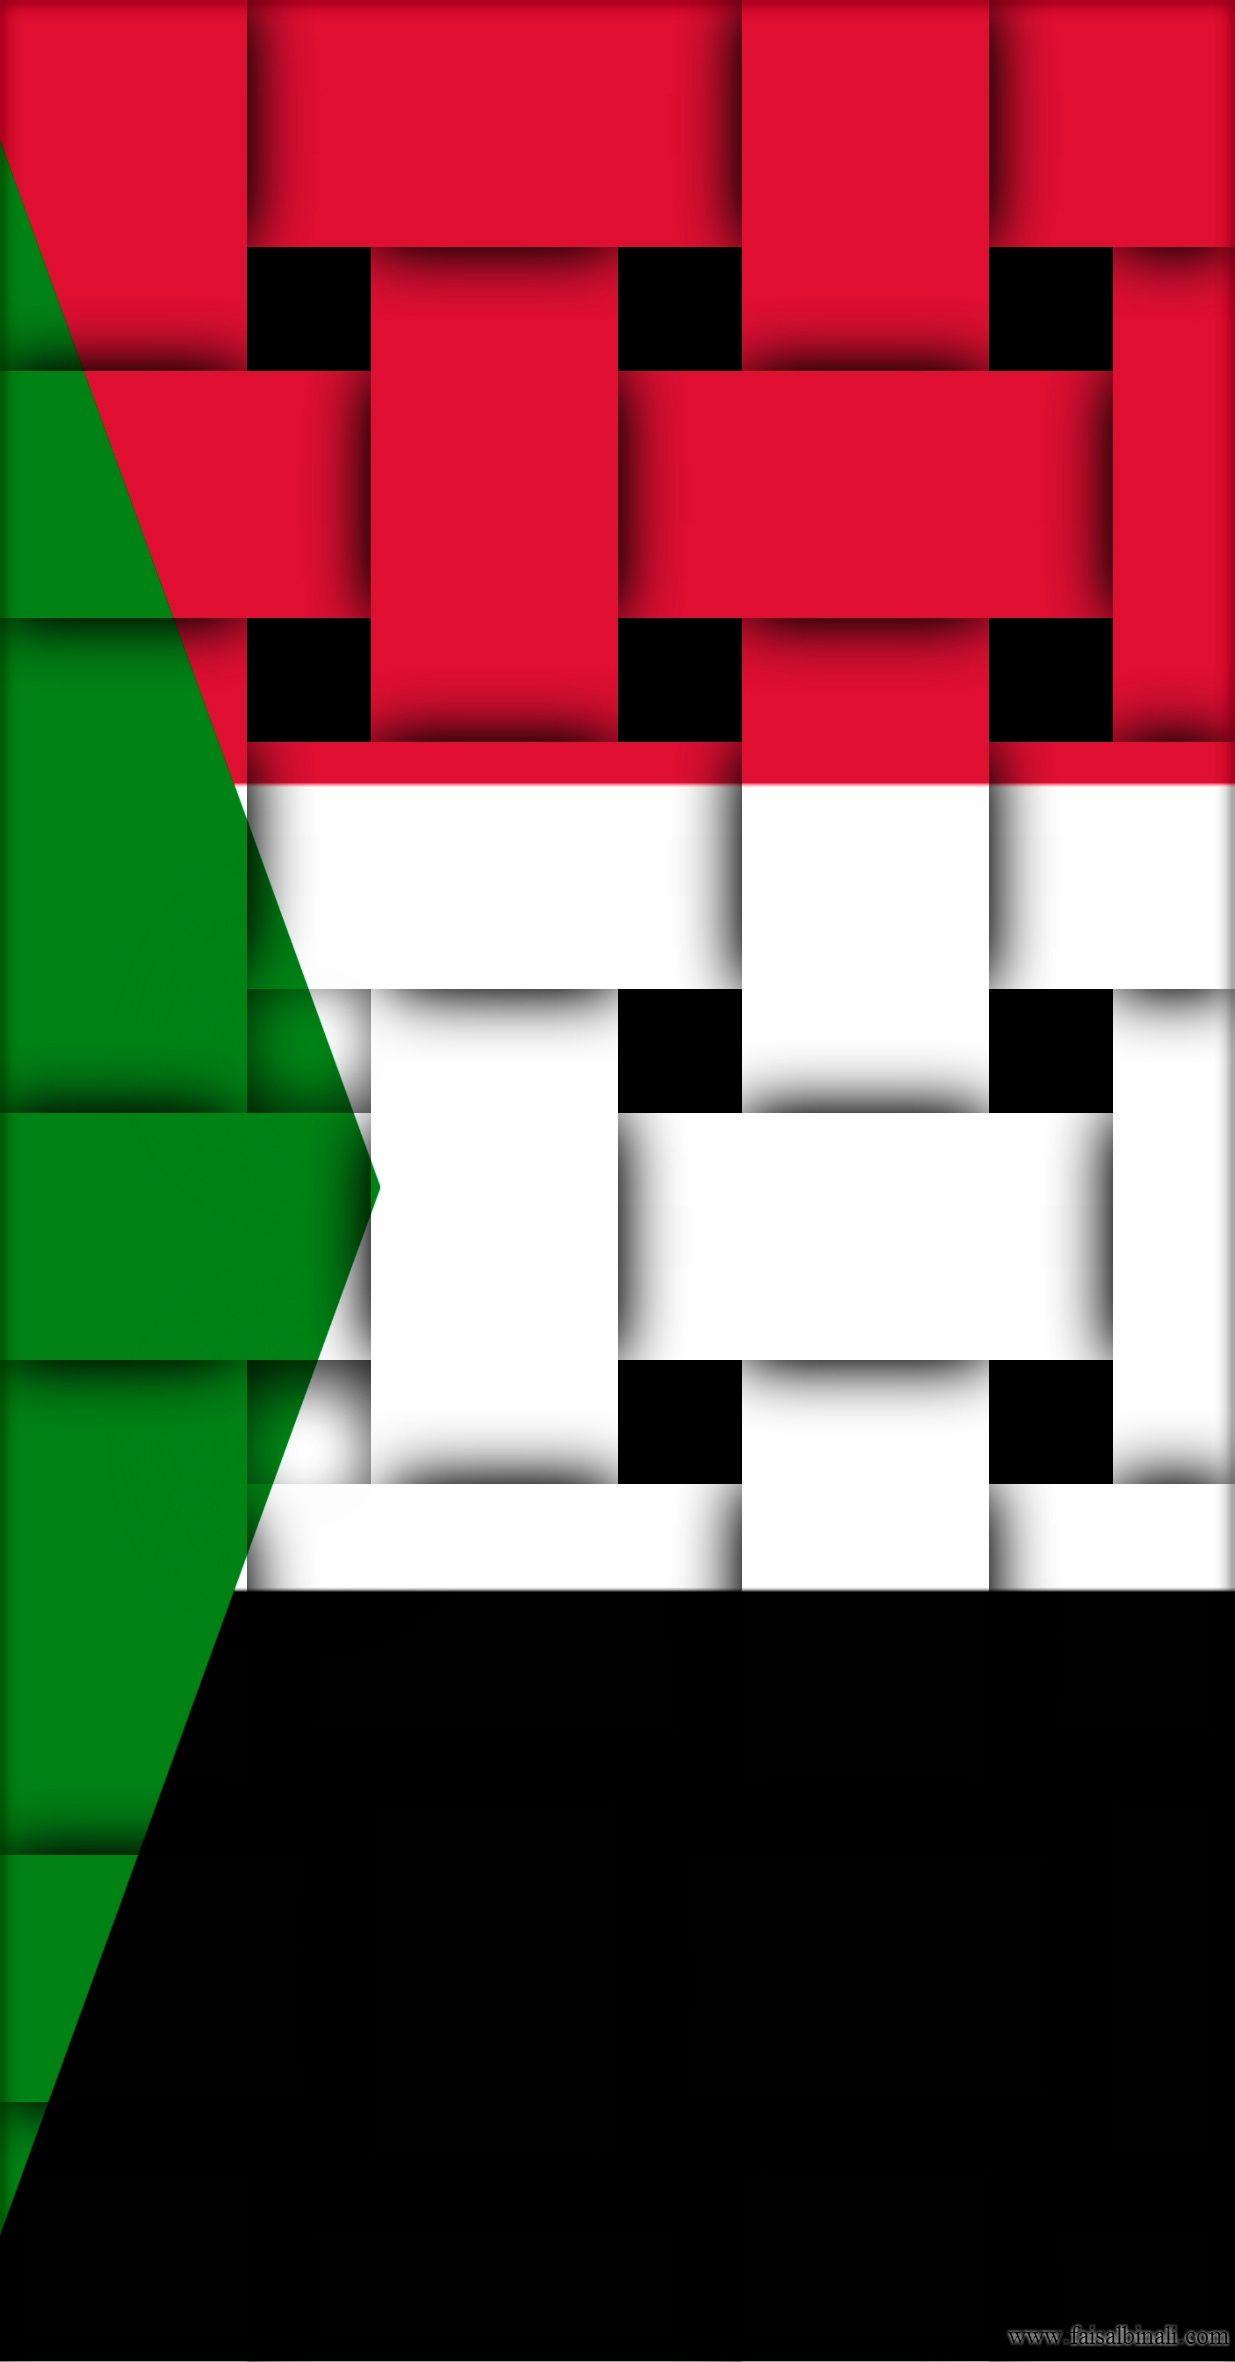 sudan #flags #artwork #Wallpaper #for #smartphones, #tablets